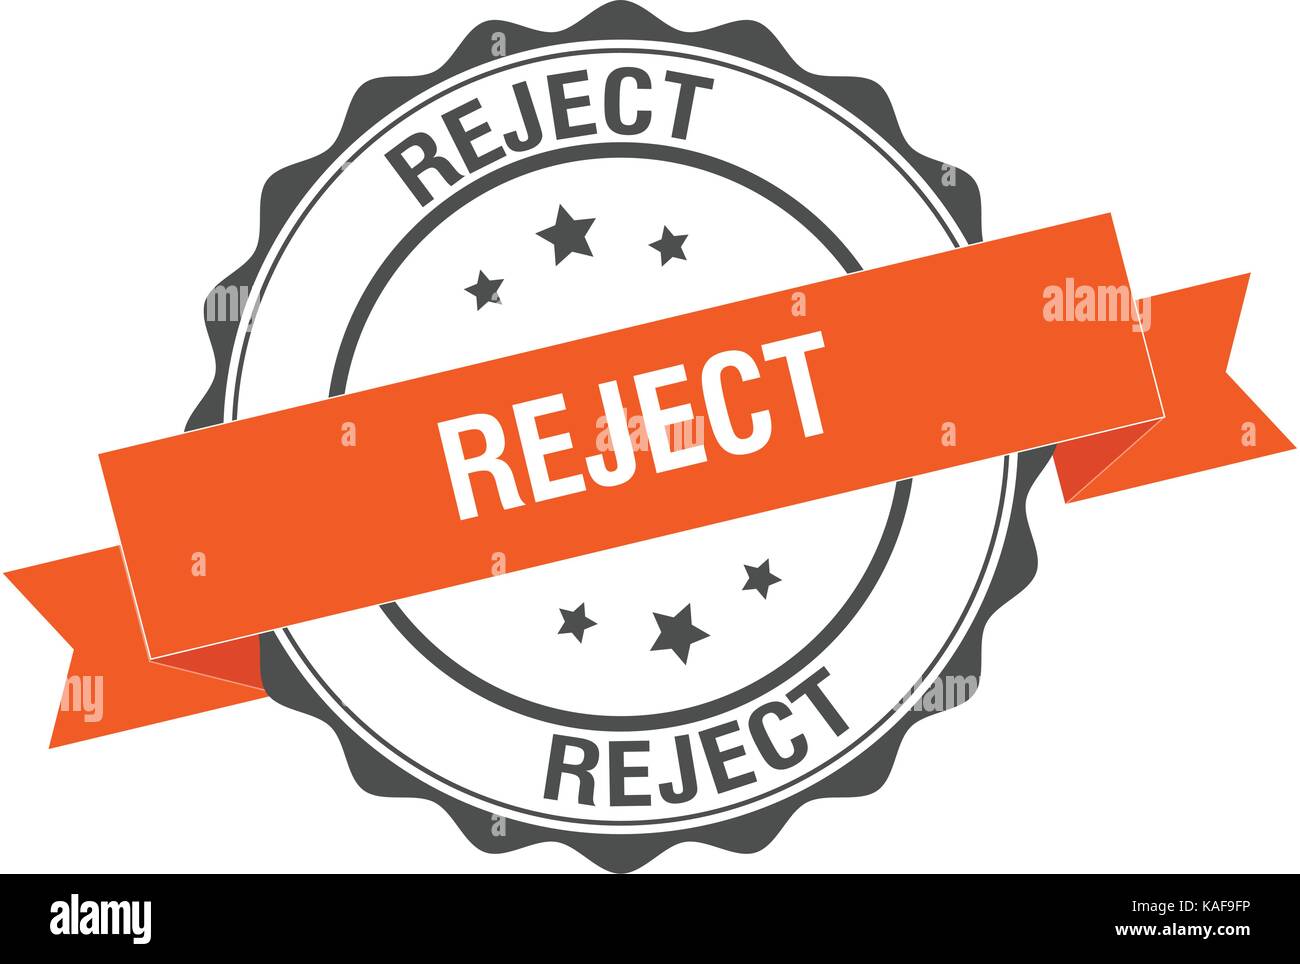 Reject stamp illustration Stock Vector